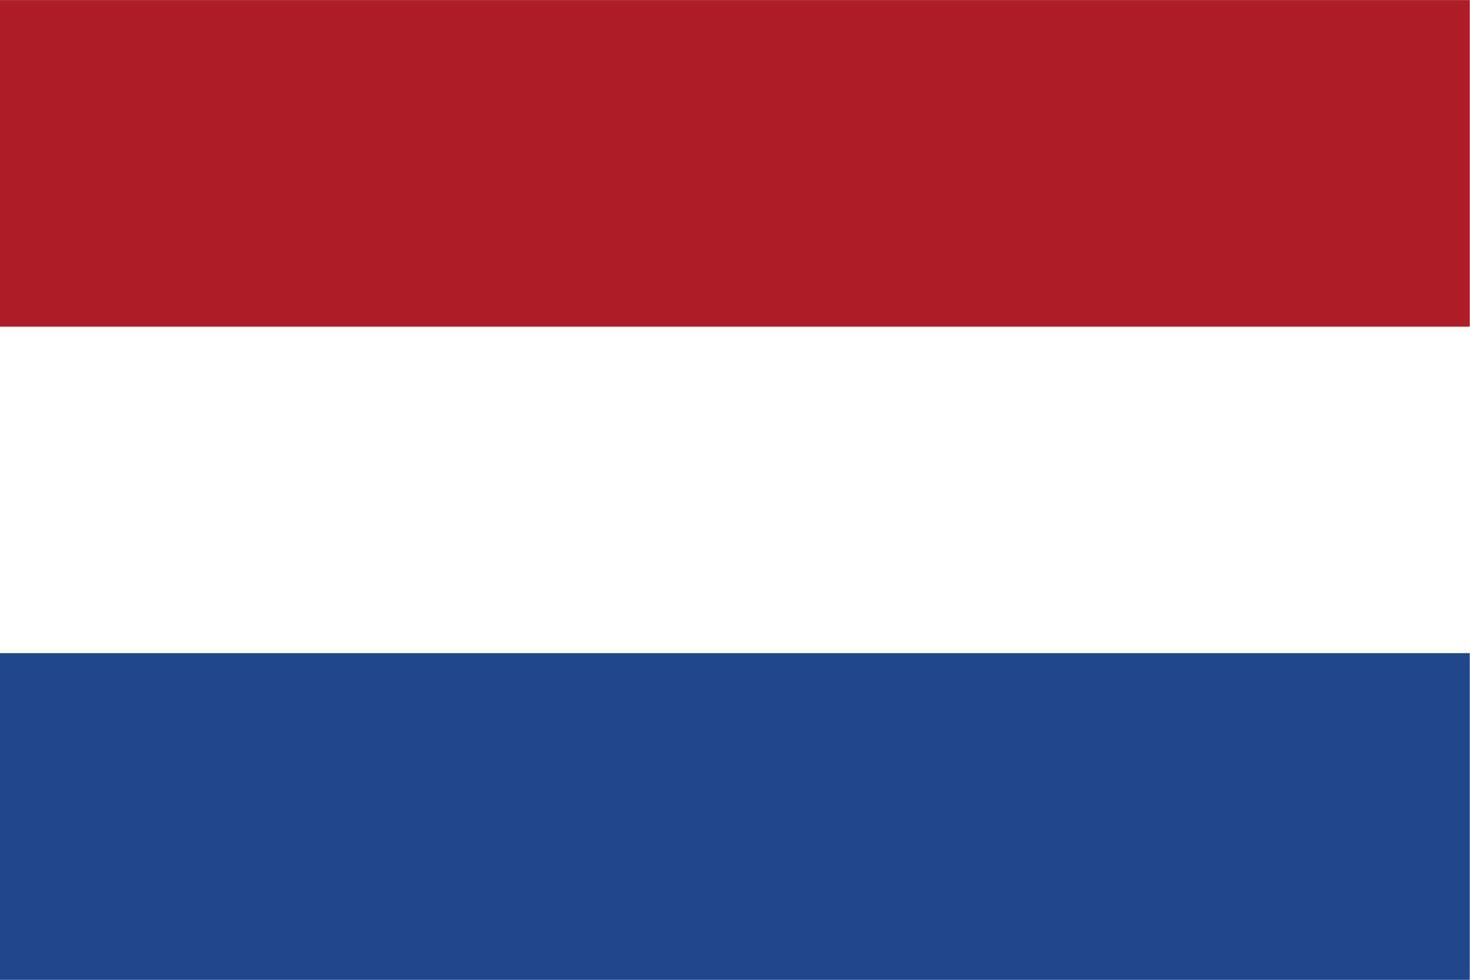 bandeira da holanda, bandeira nacional da holanda vetor de alta qualidade